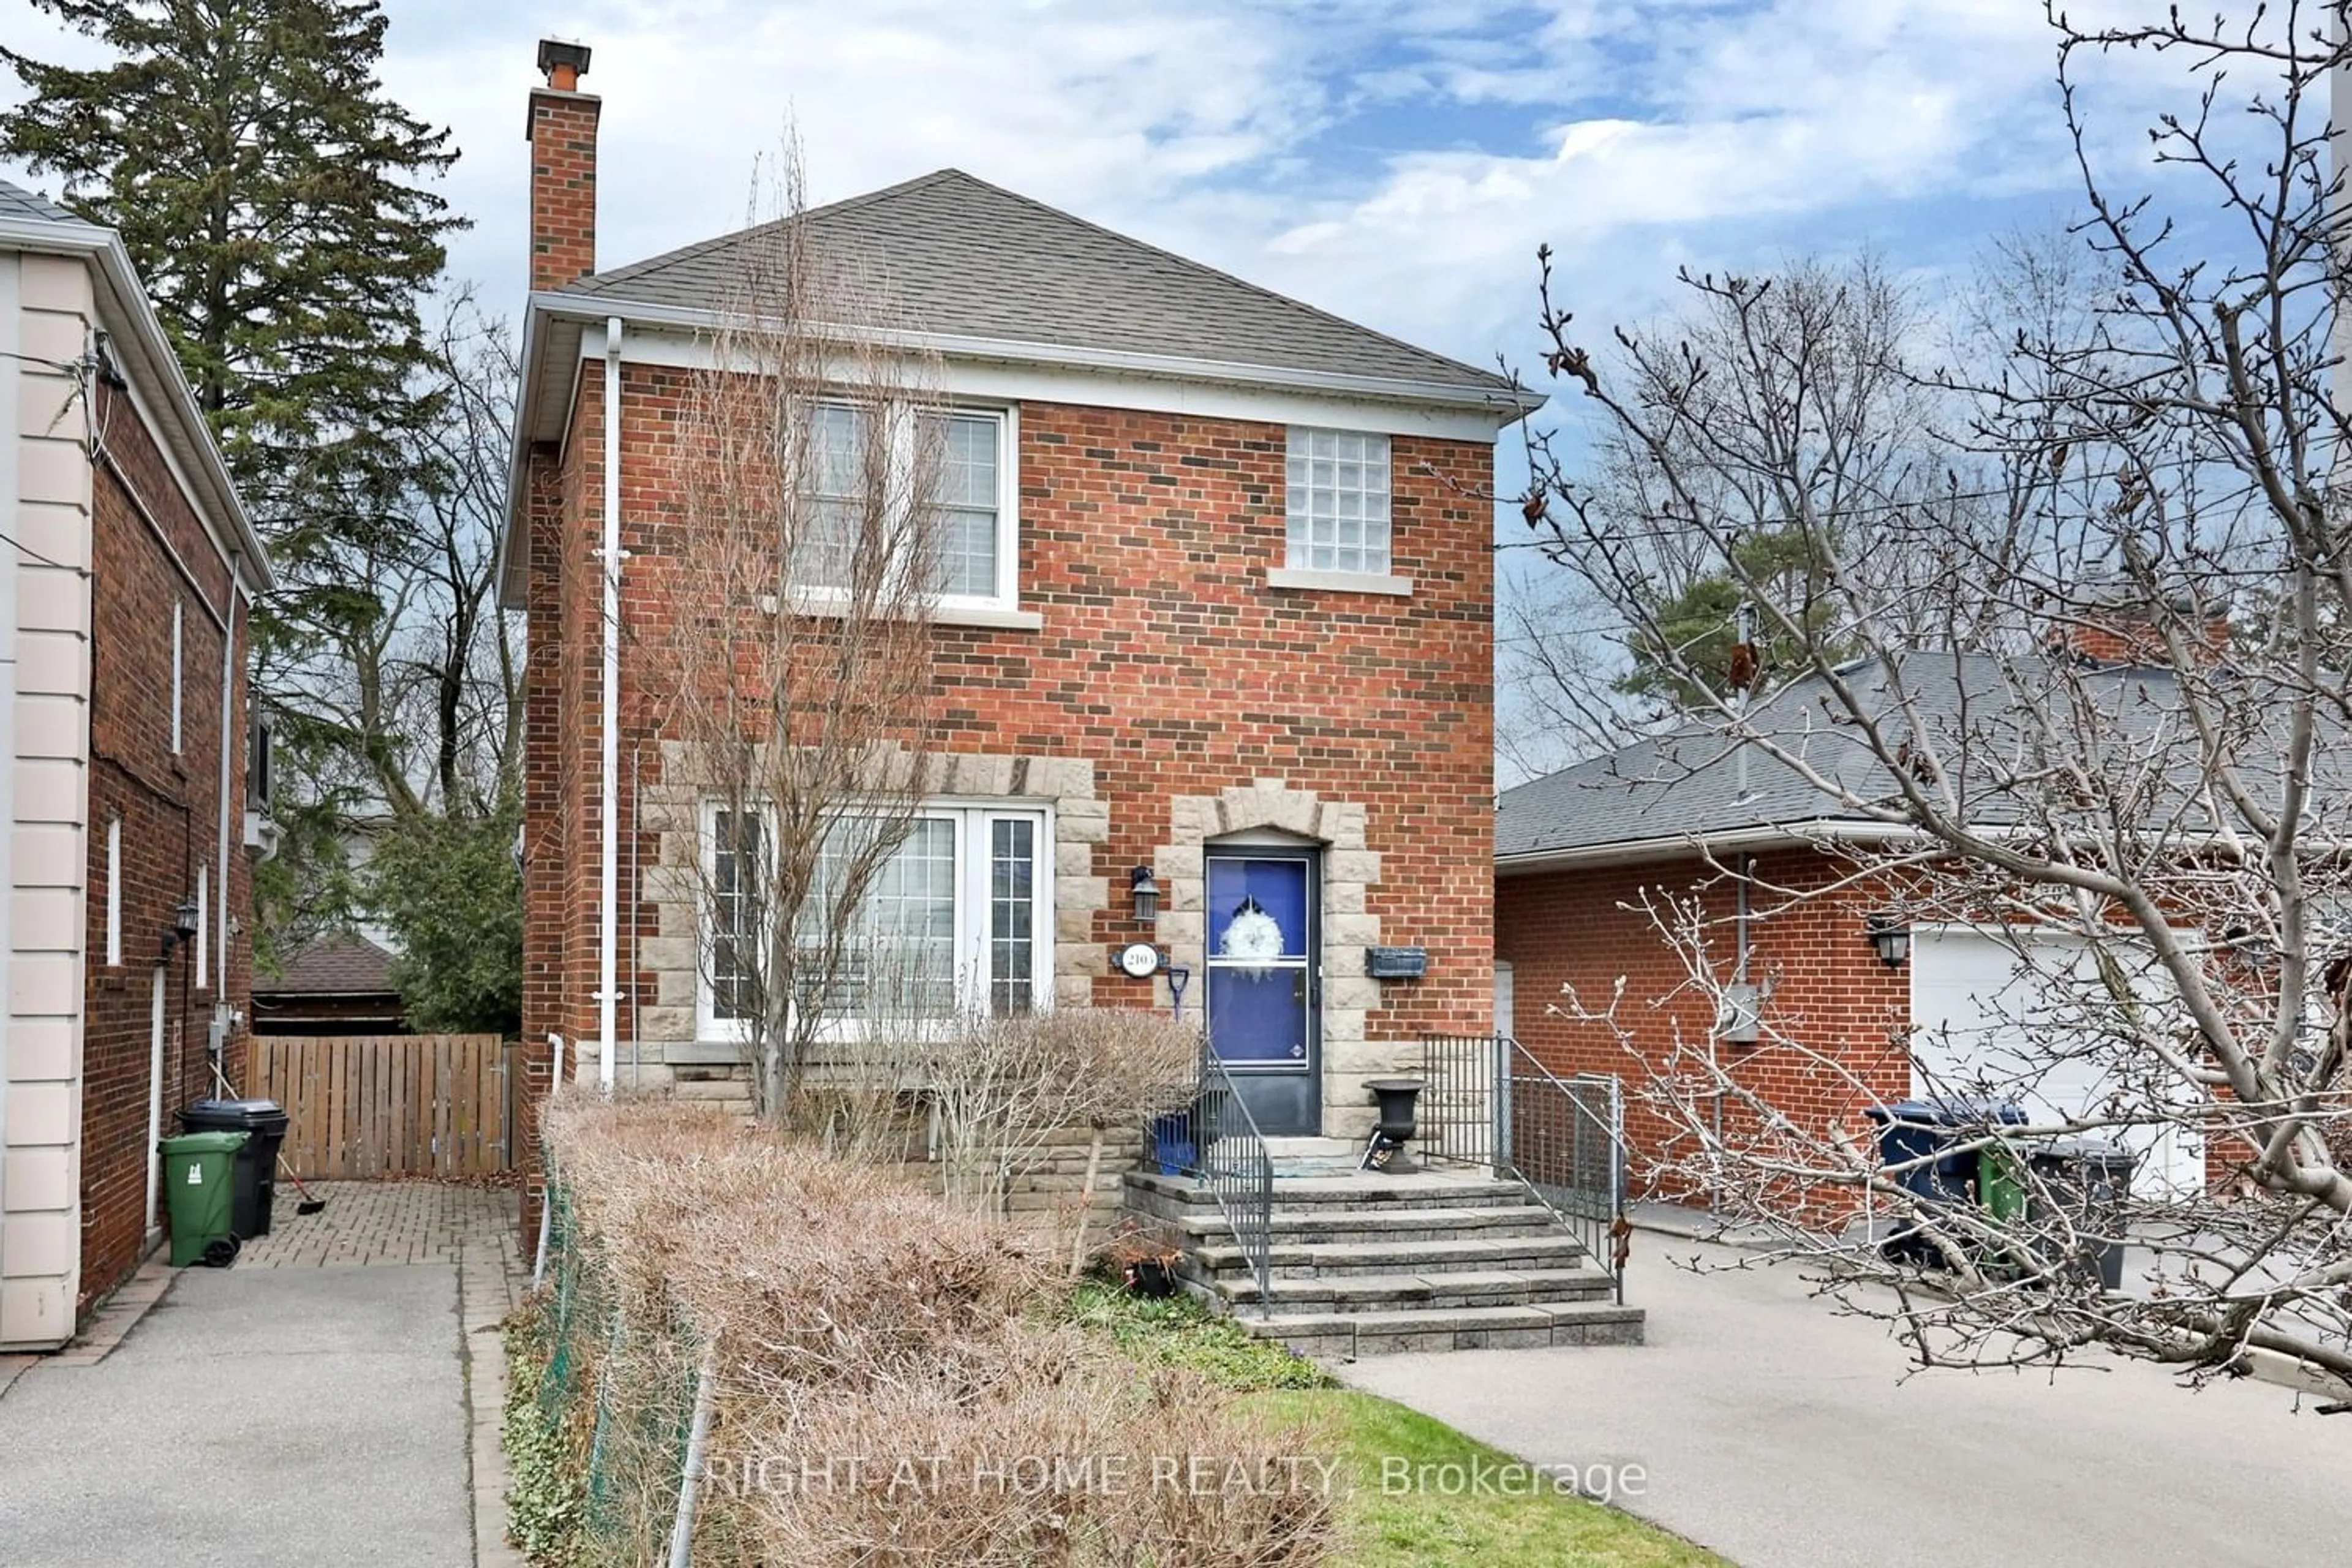 Home with brick exterior material for 2103 Avenue Rd, Toronto Ontario M5M 4A9